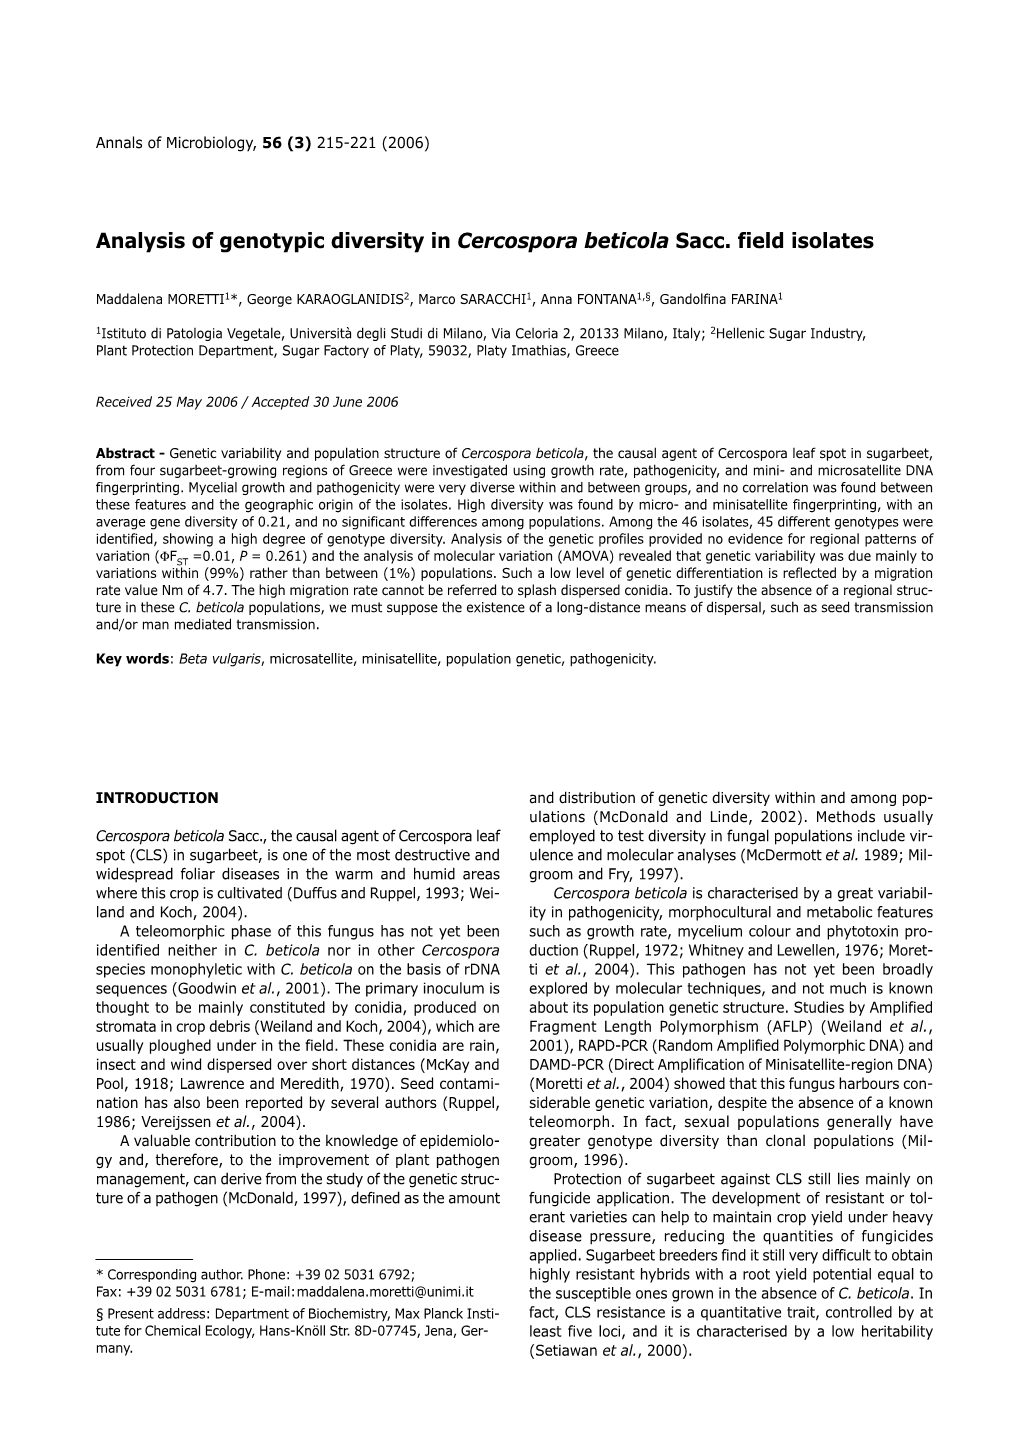 Analysis of Genotypic Diversity in Cercospora Beticola Sacc. Field Isolates